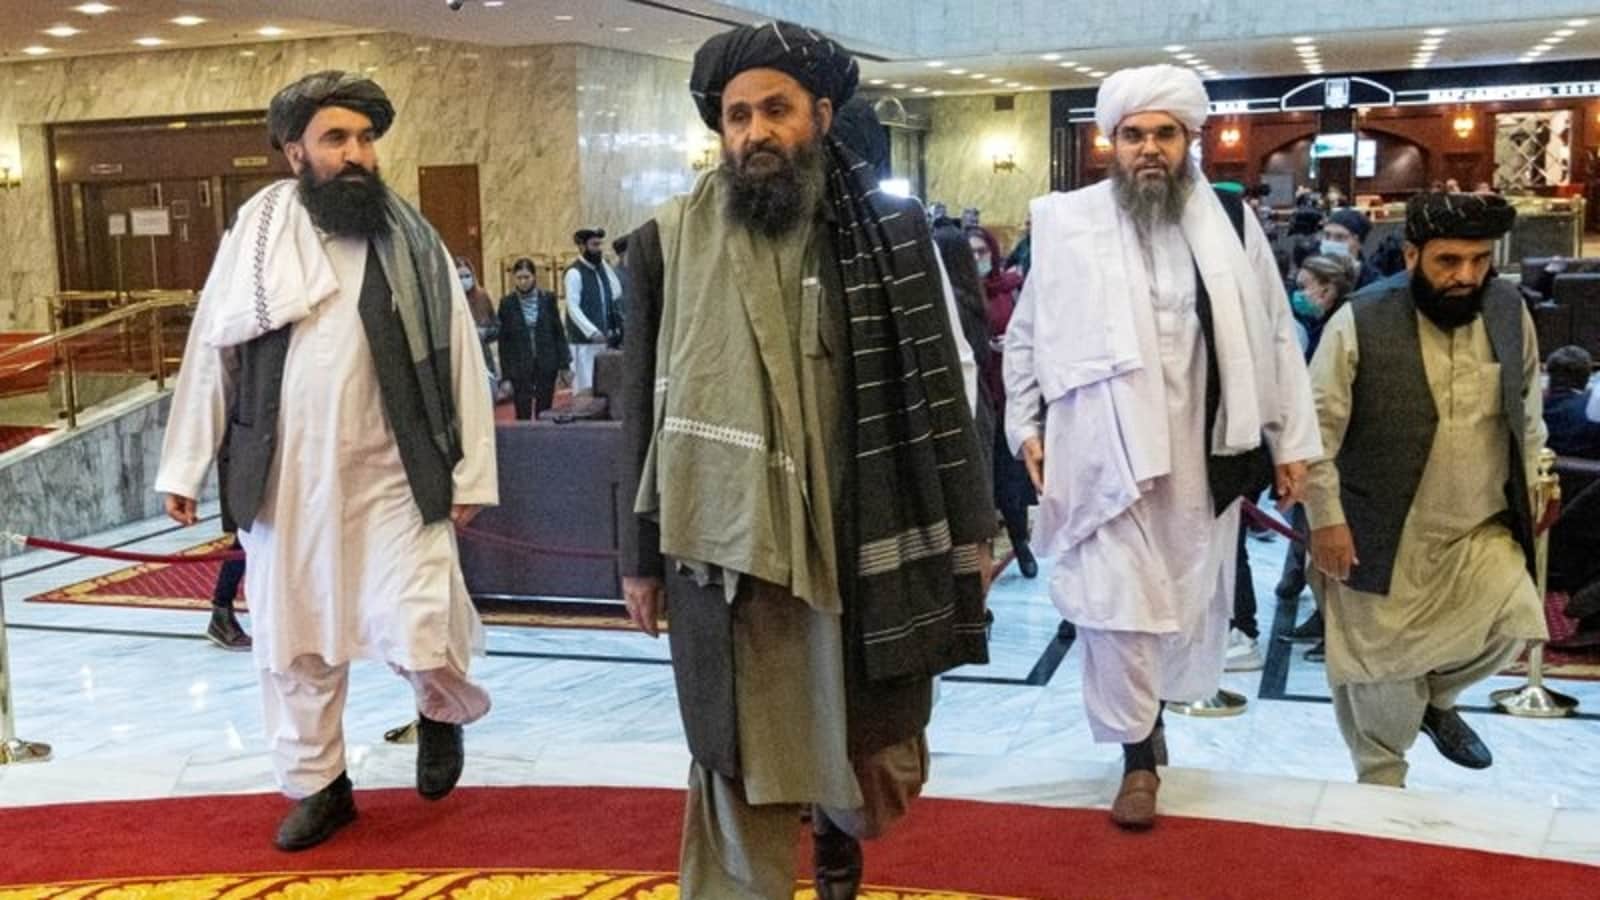 Baradar Taliban Reuters